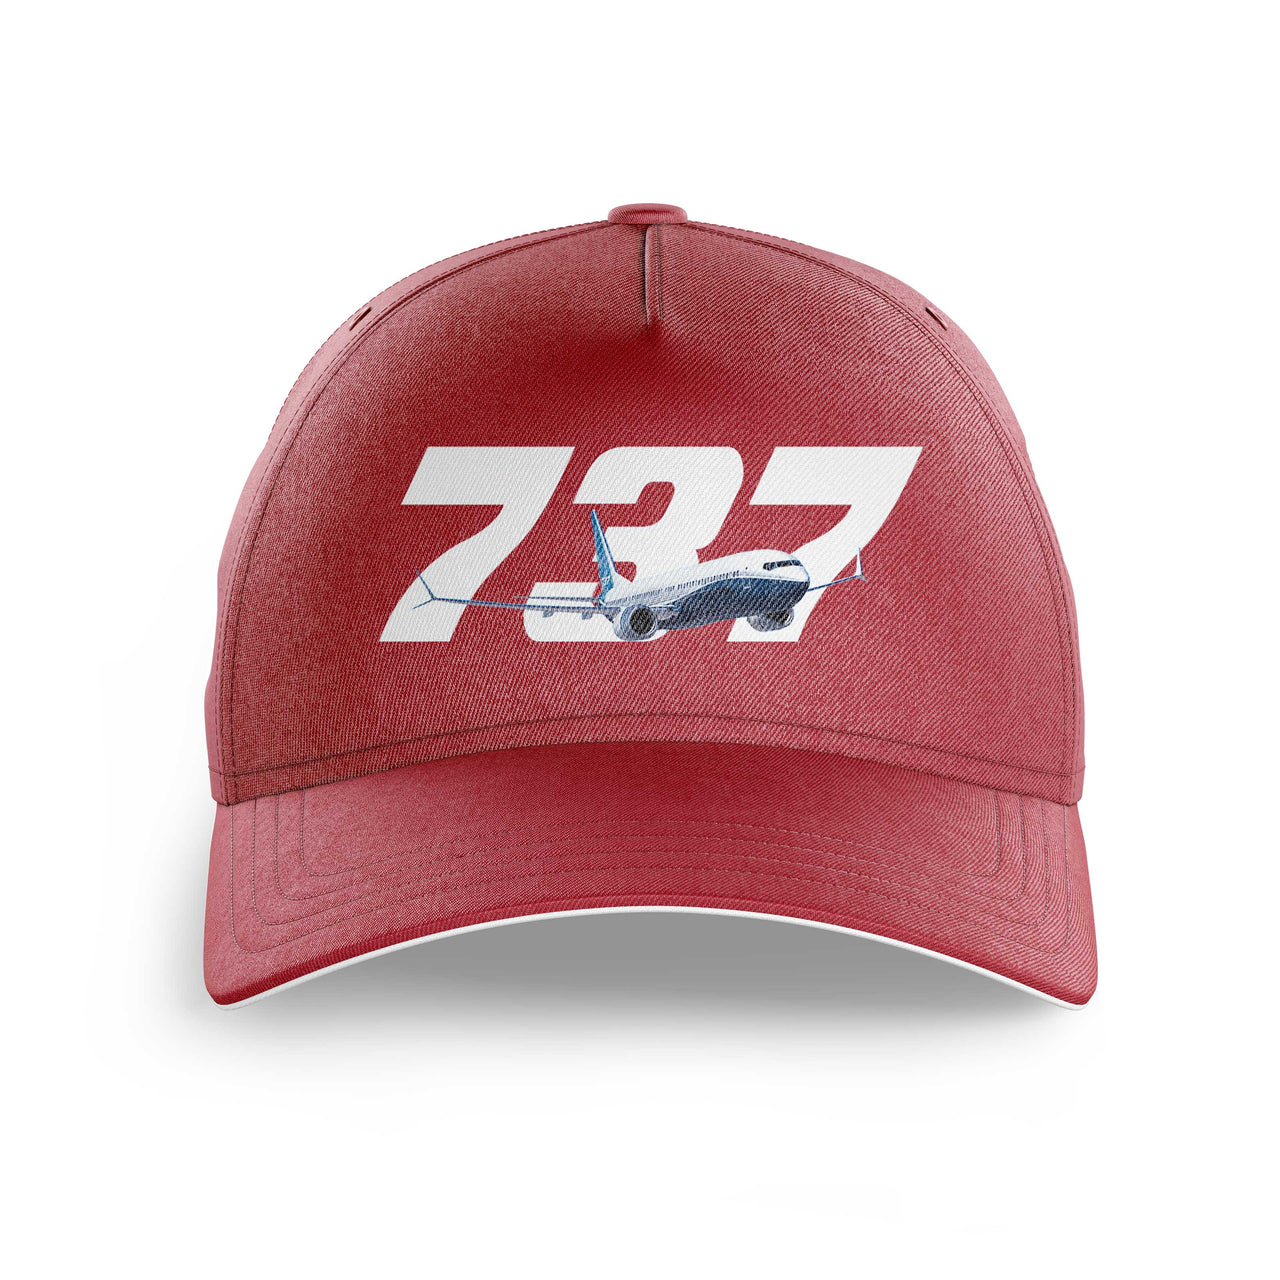 Super Boeing 737 Printed Hats